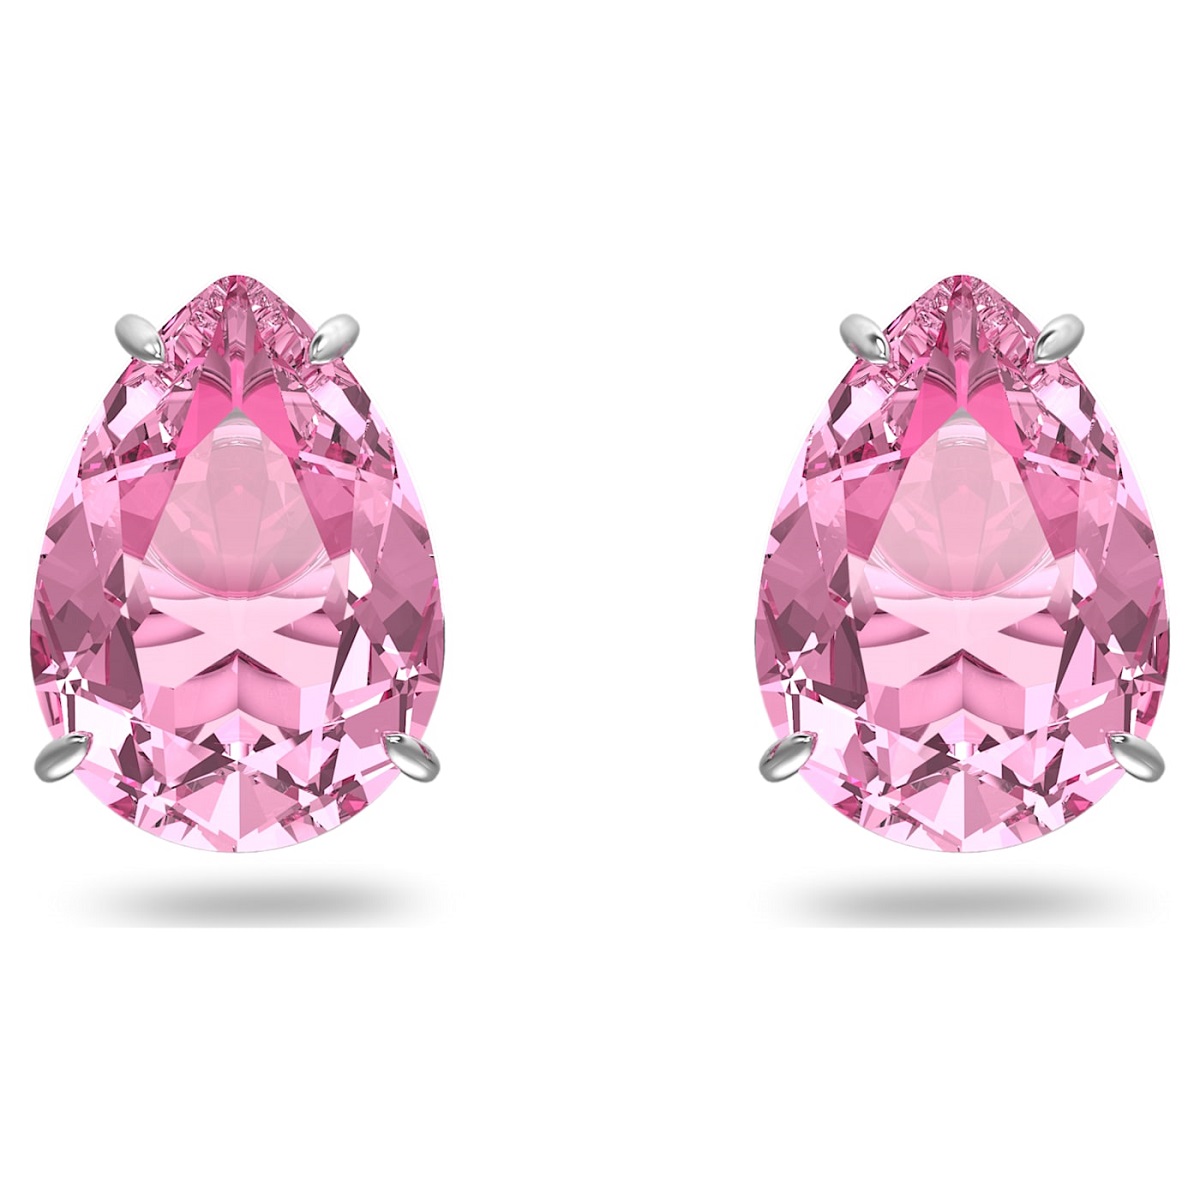 Swarovski Gema Stud Earrings - Pink with Rhodium Plating 5614455